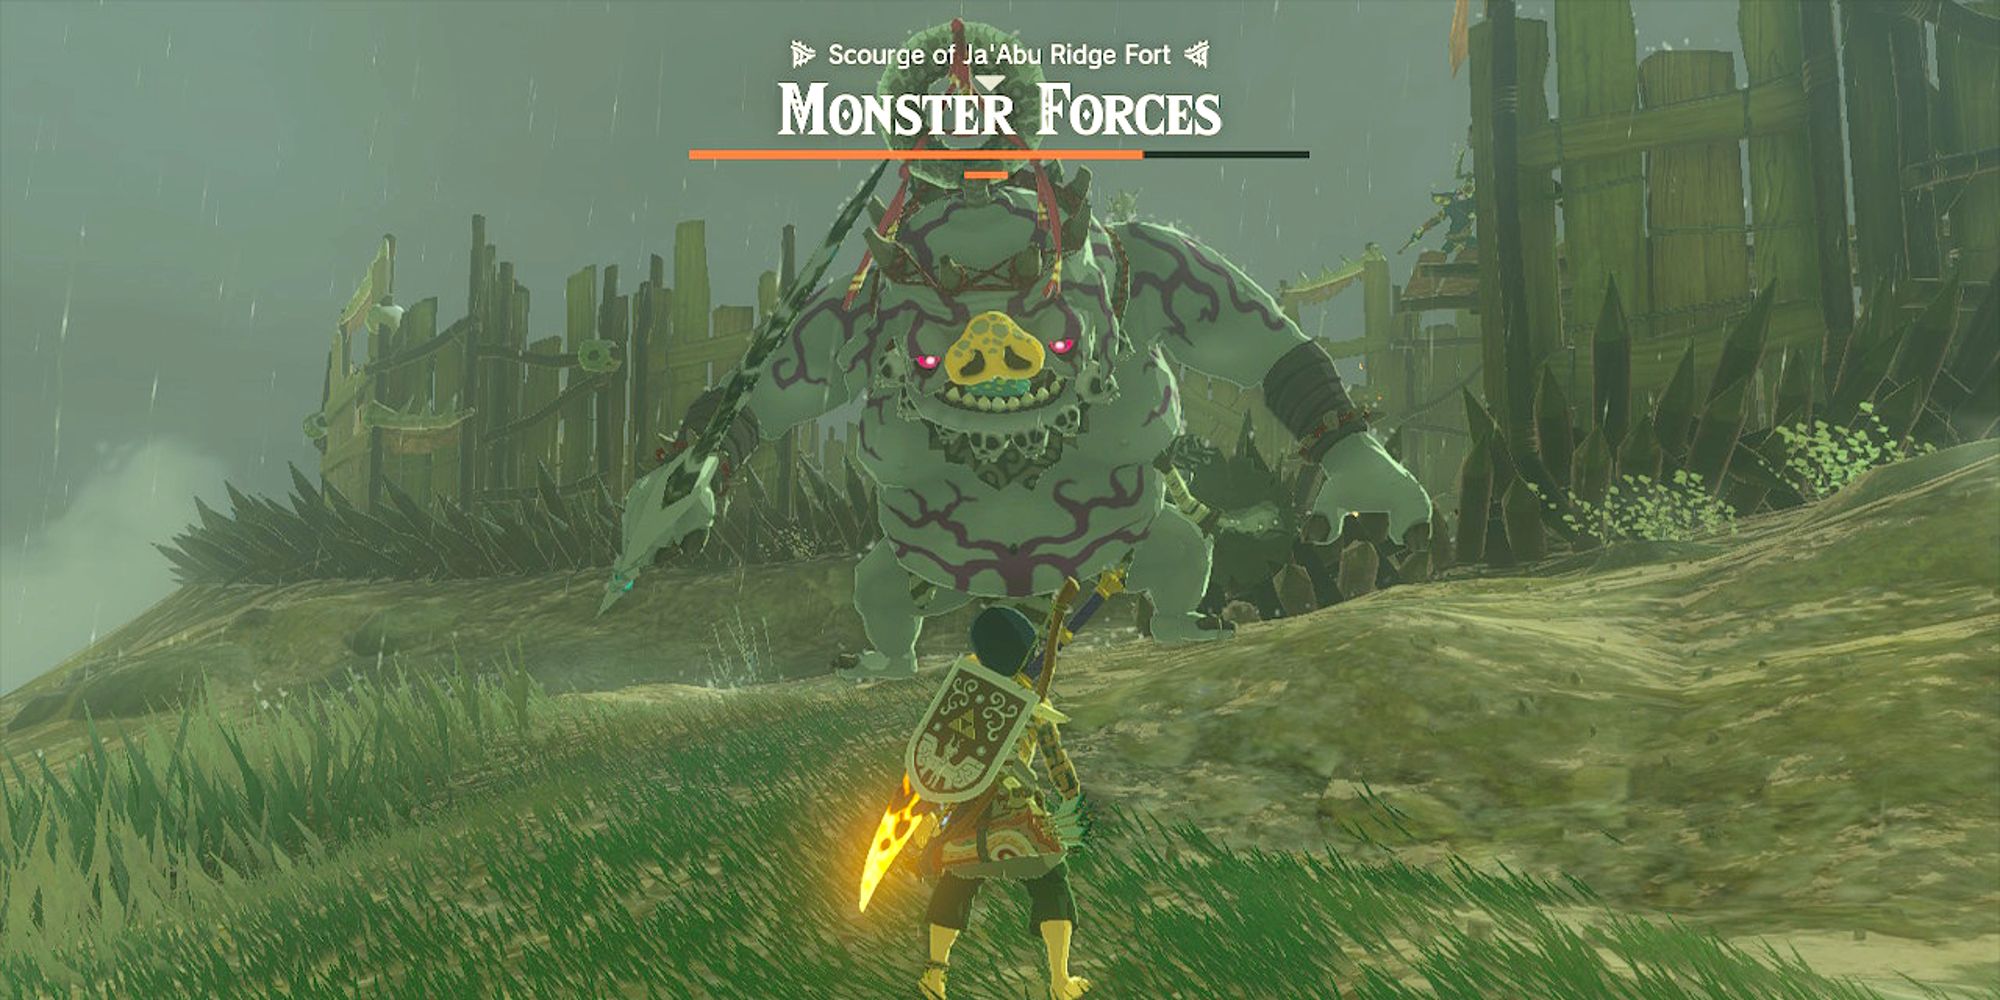 TotK-Jaabu-Monster-Forces-Boss